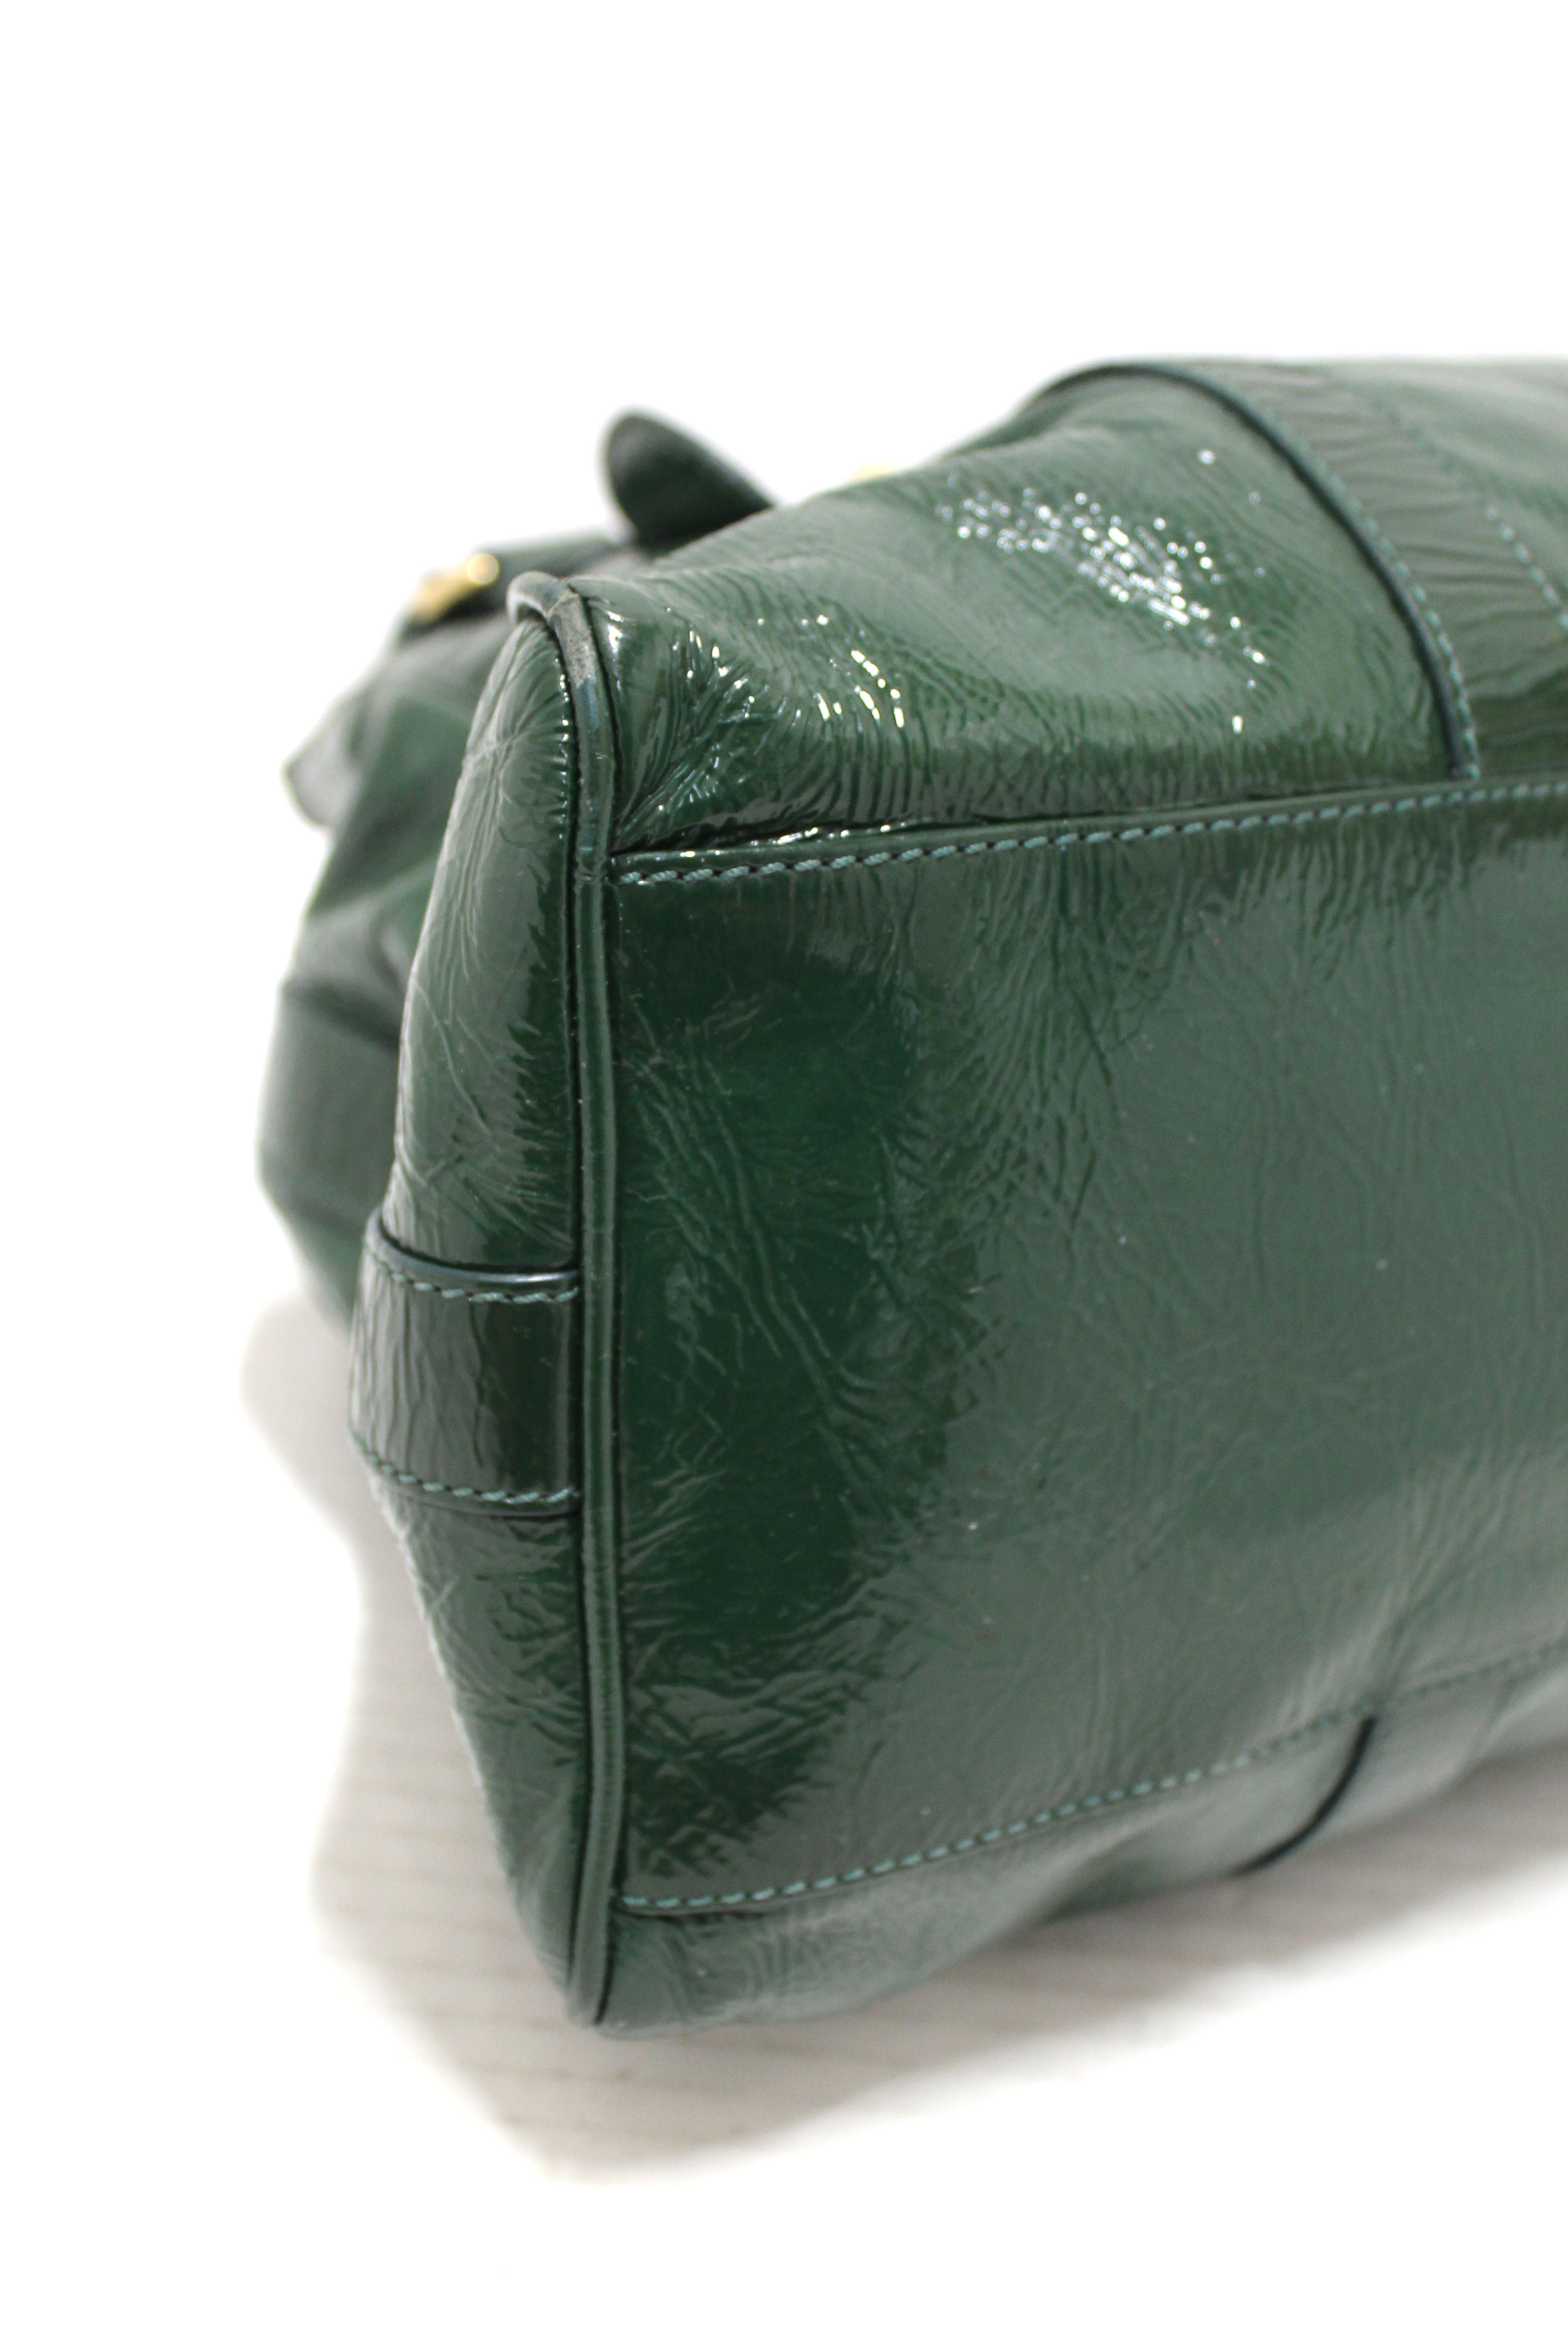 Authentic Fendi Green Patent Leather Shoulder Bag